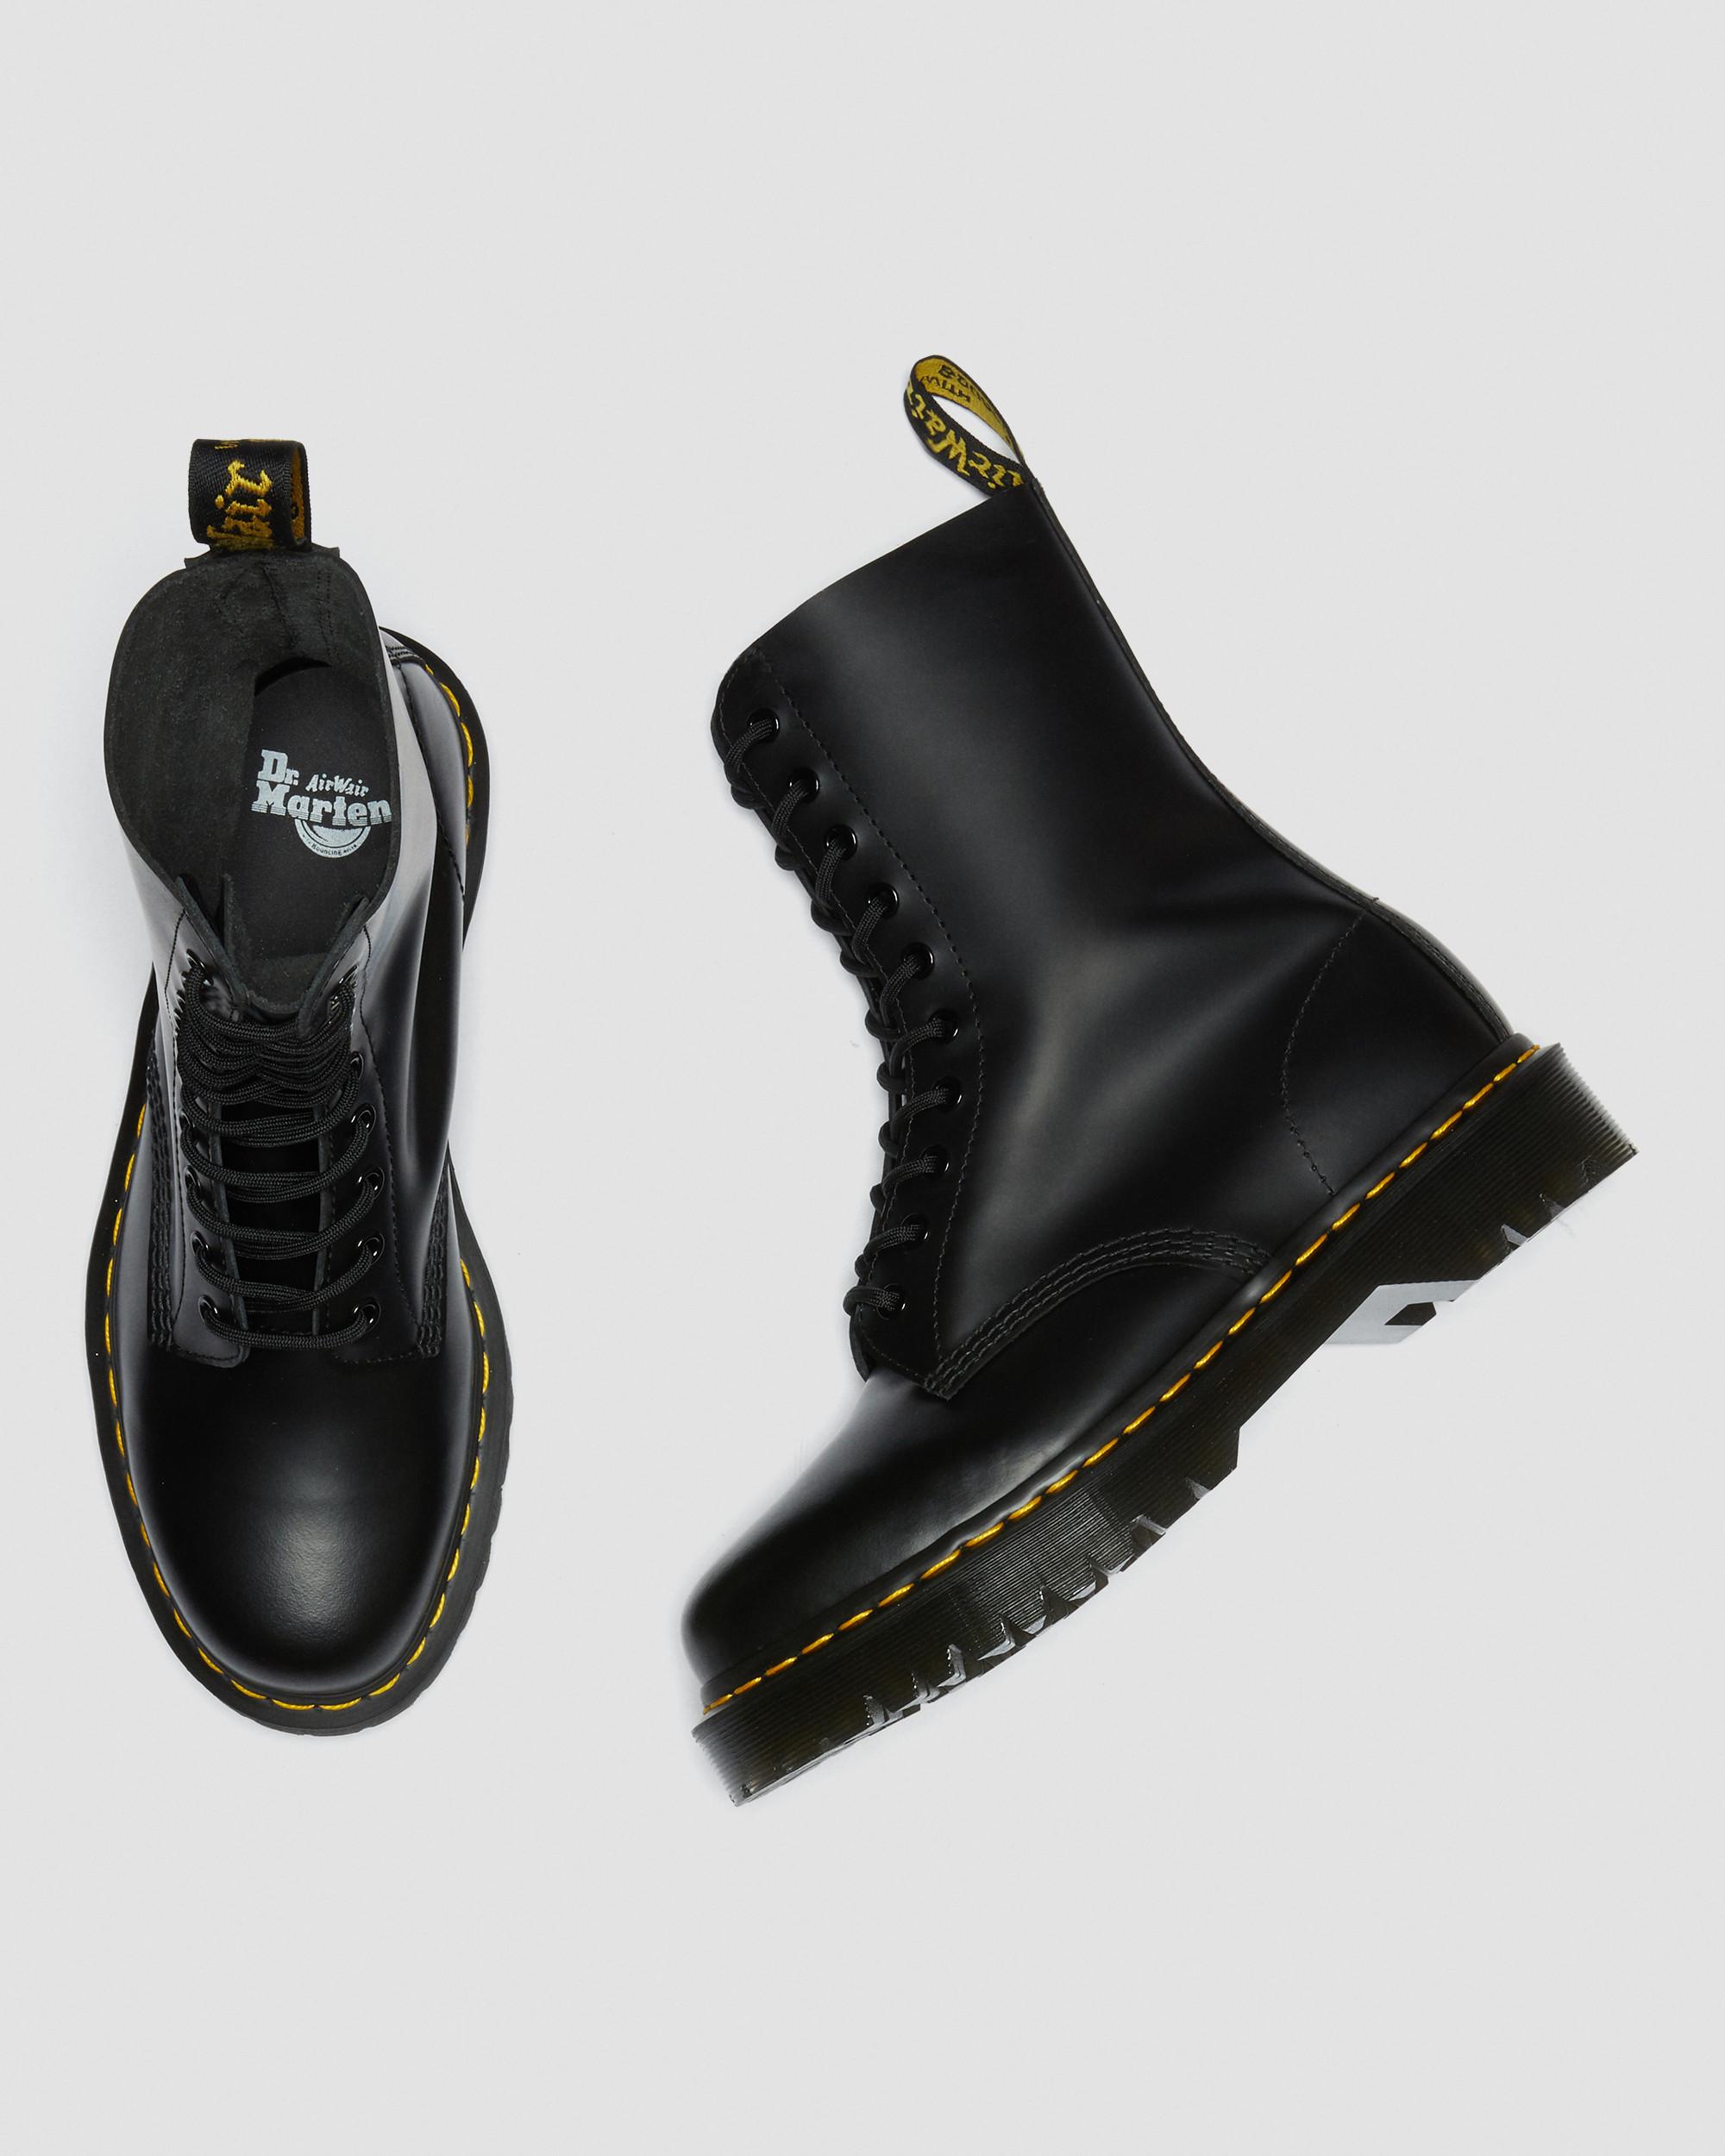 Dr Martens 1490 10 Eye Bex Boots in Black